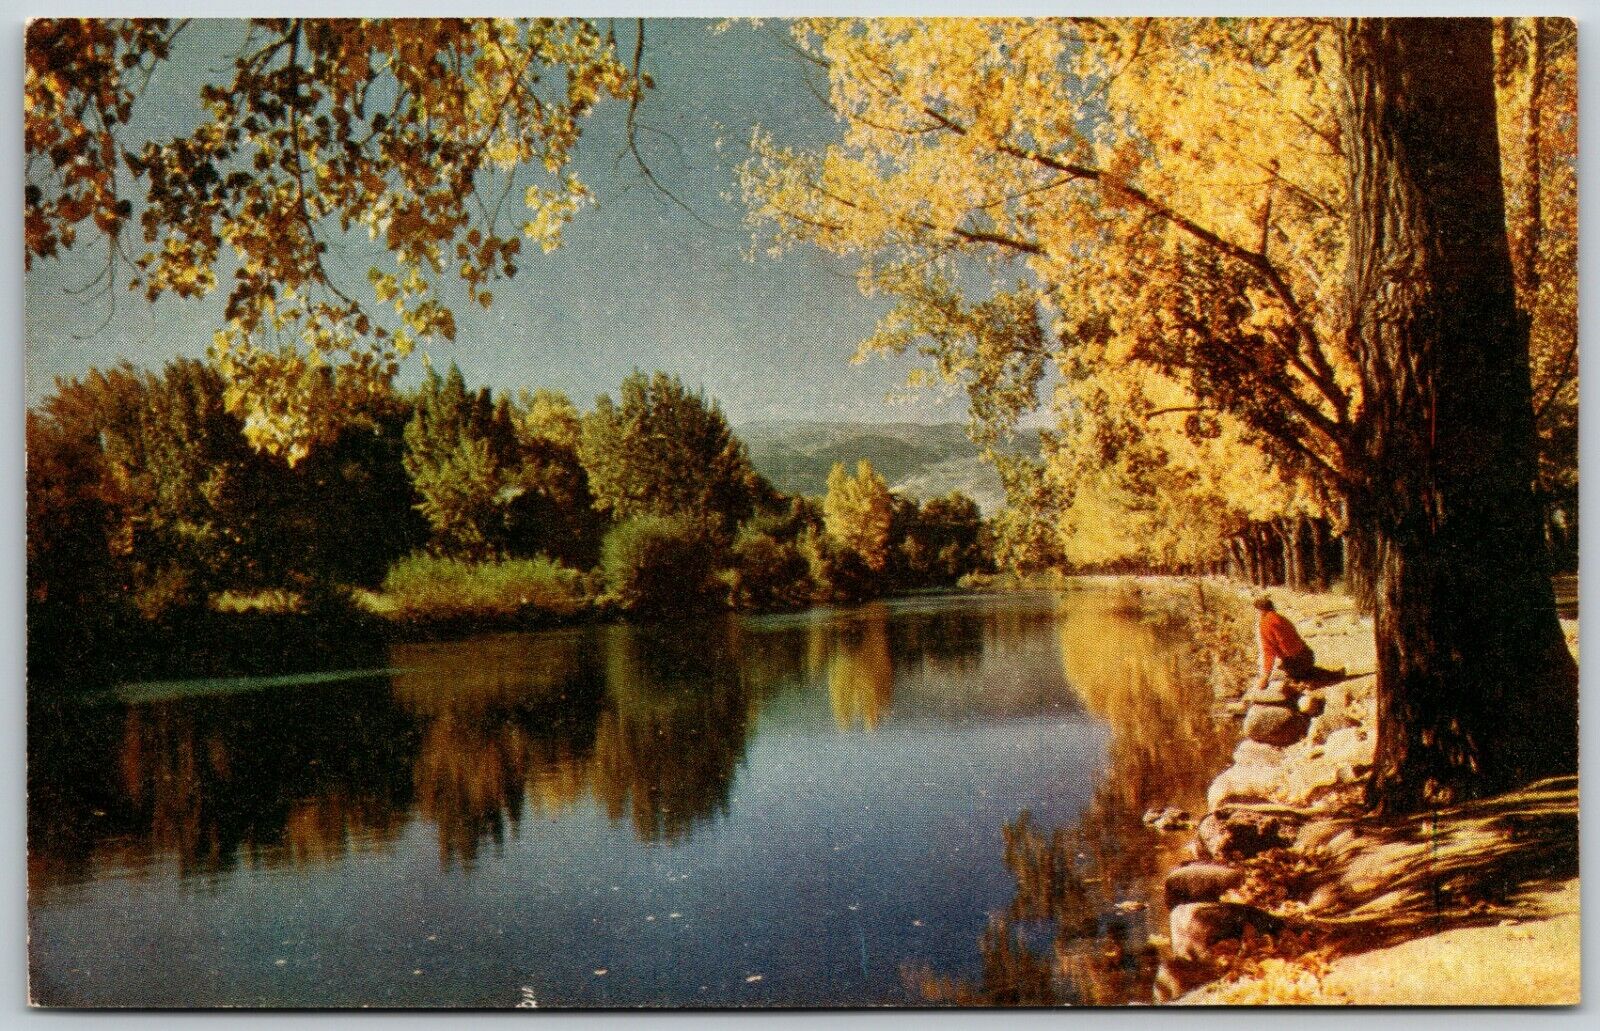 Truckee River in Autumn near Reno, Nevada - Postcard